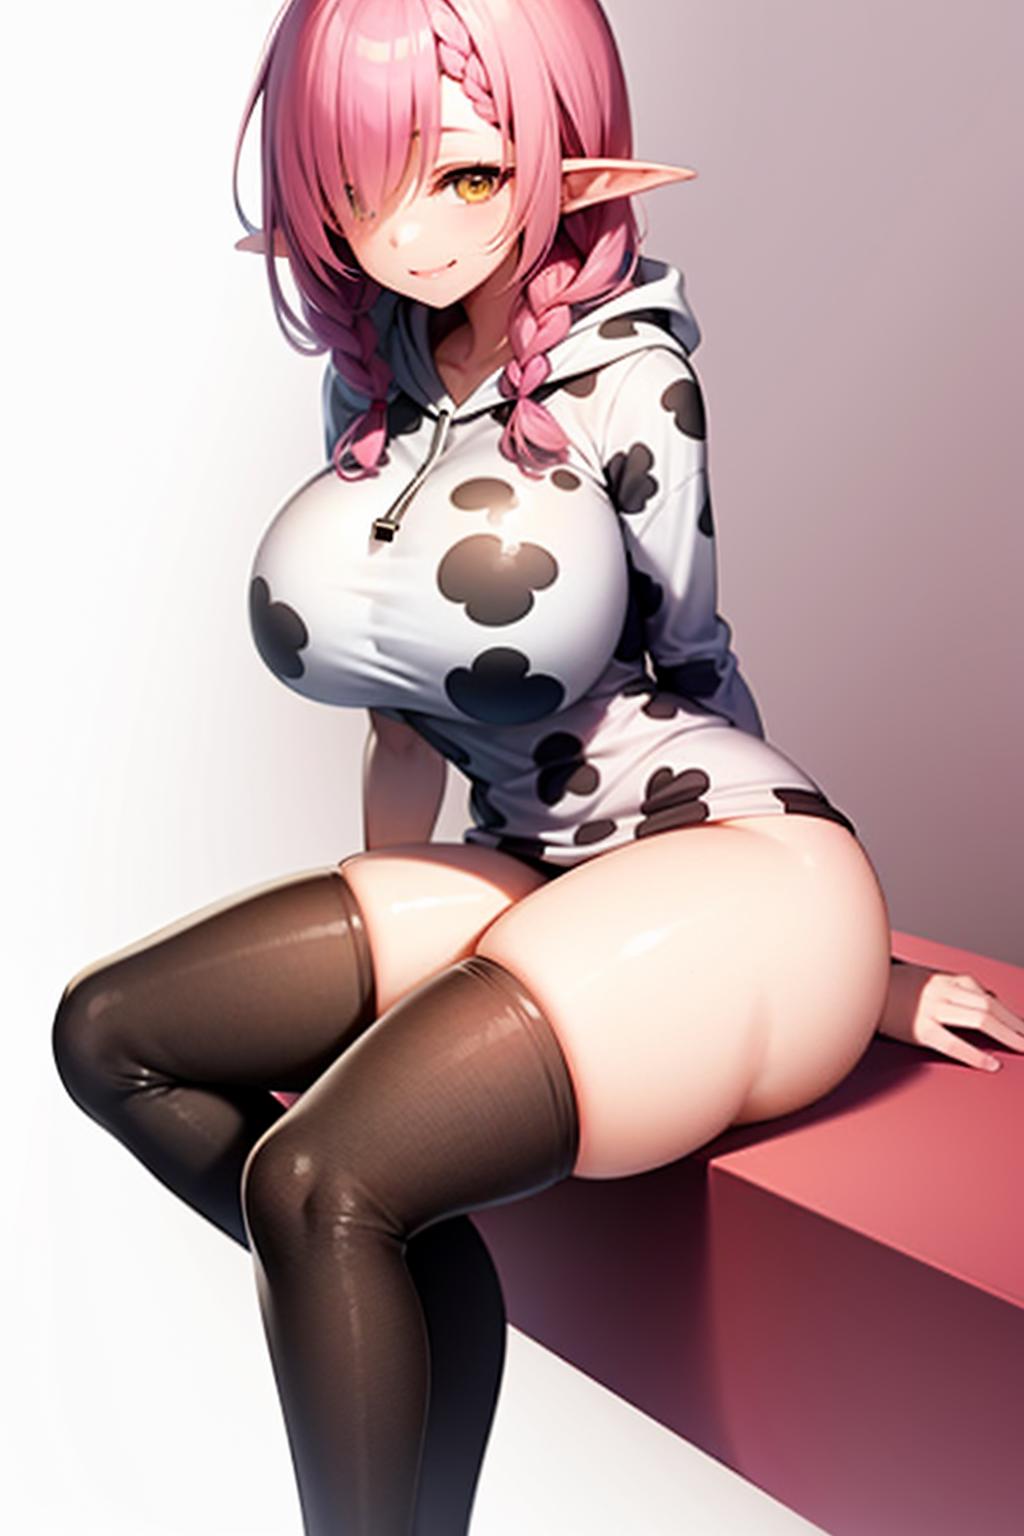 Cow Print and Bikini image by Goofy_Ai